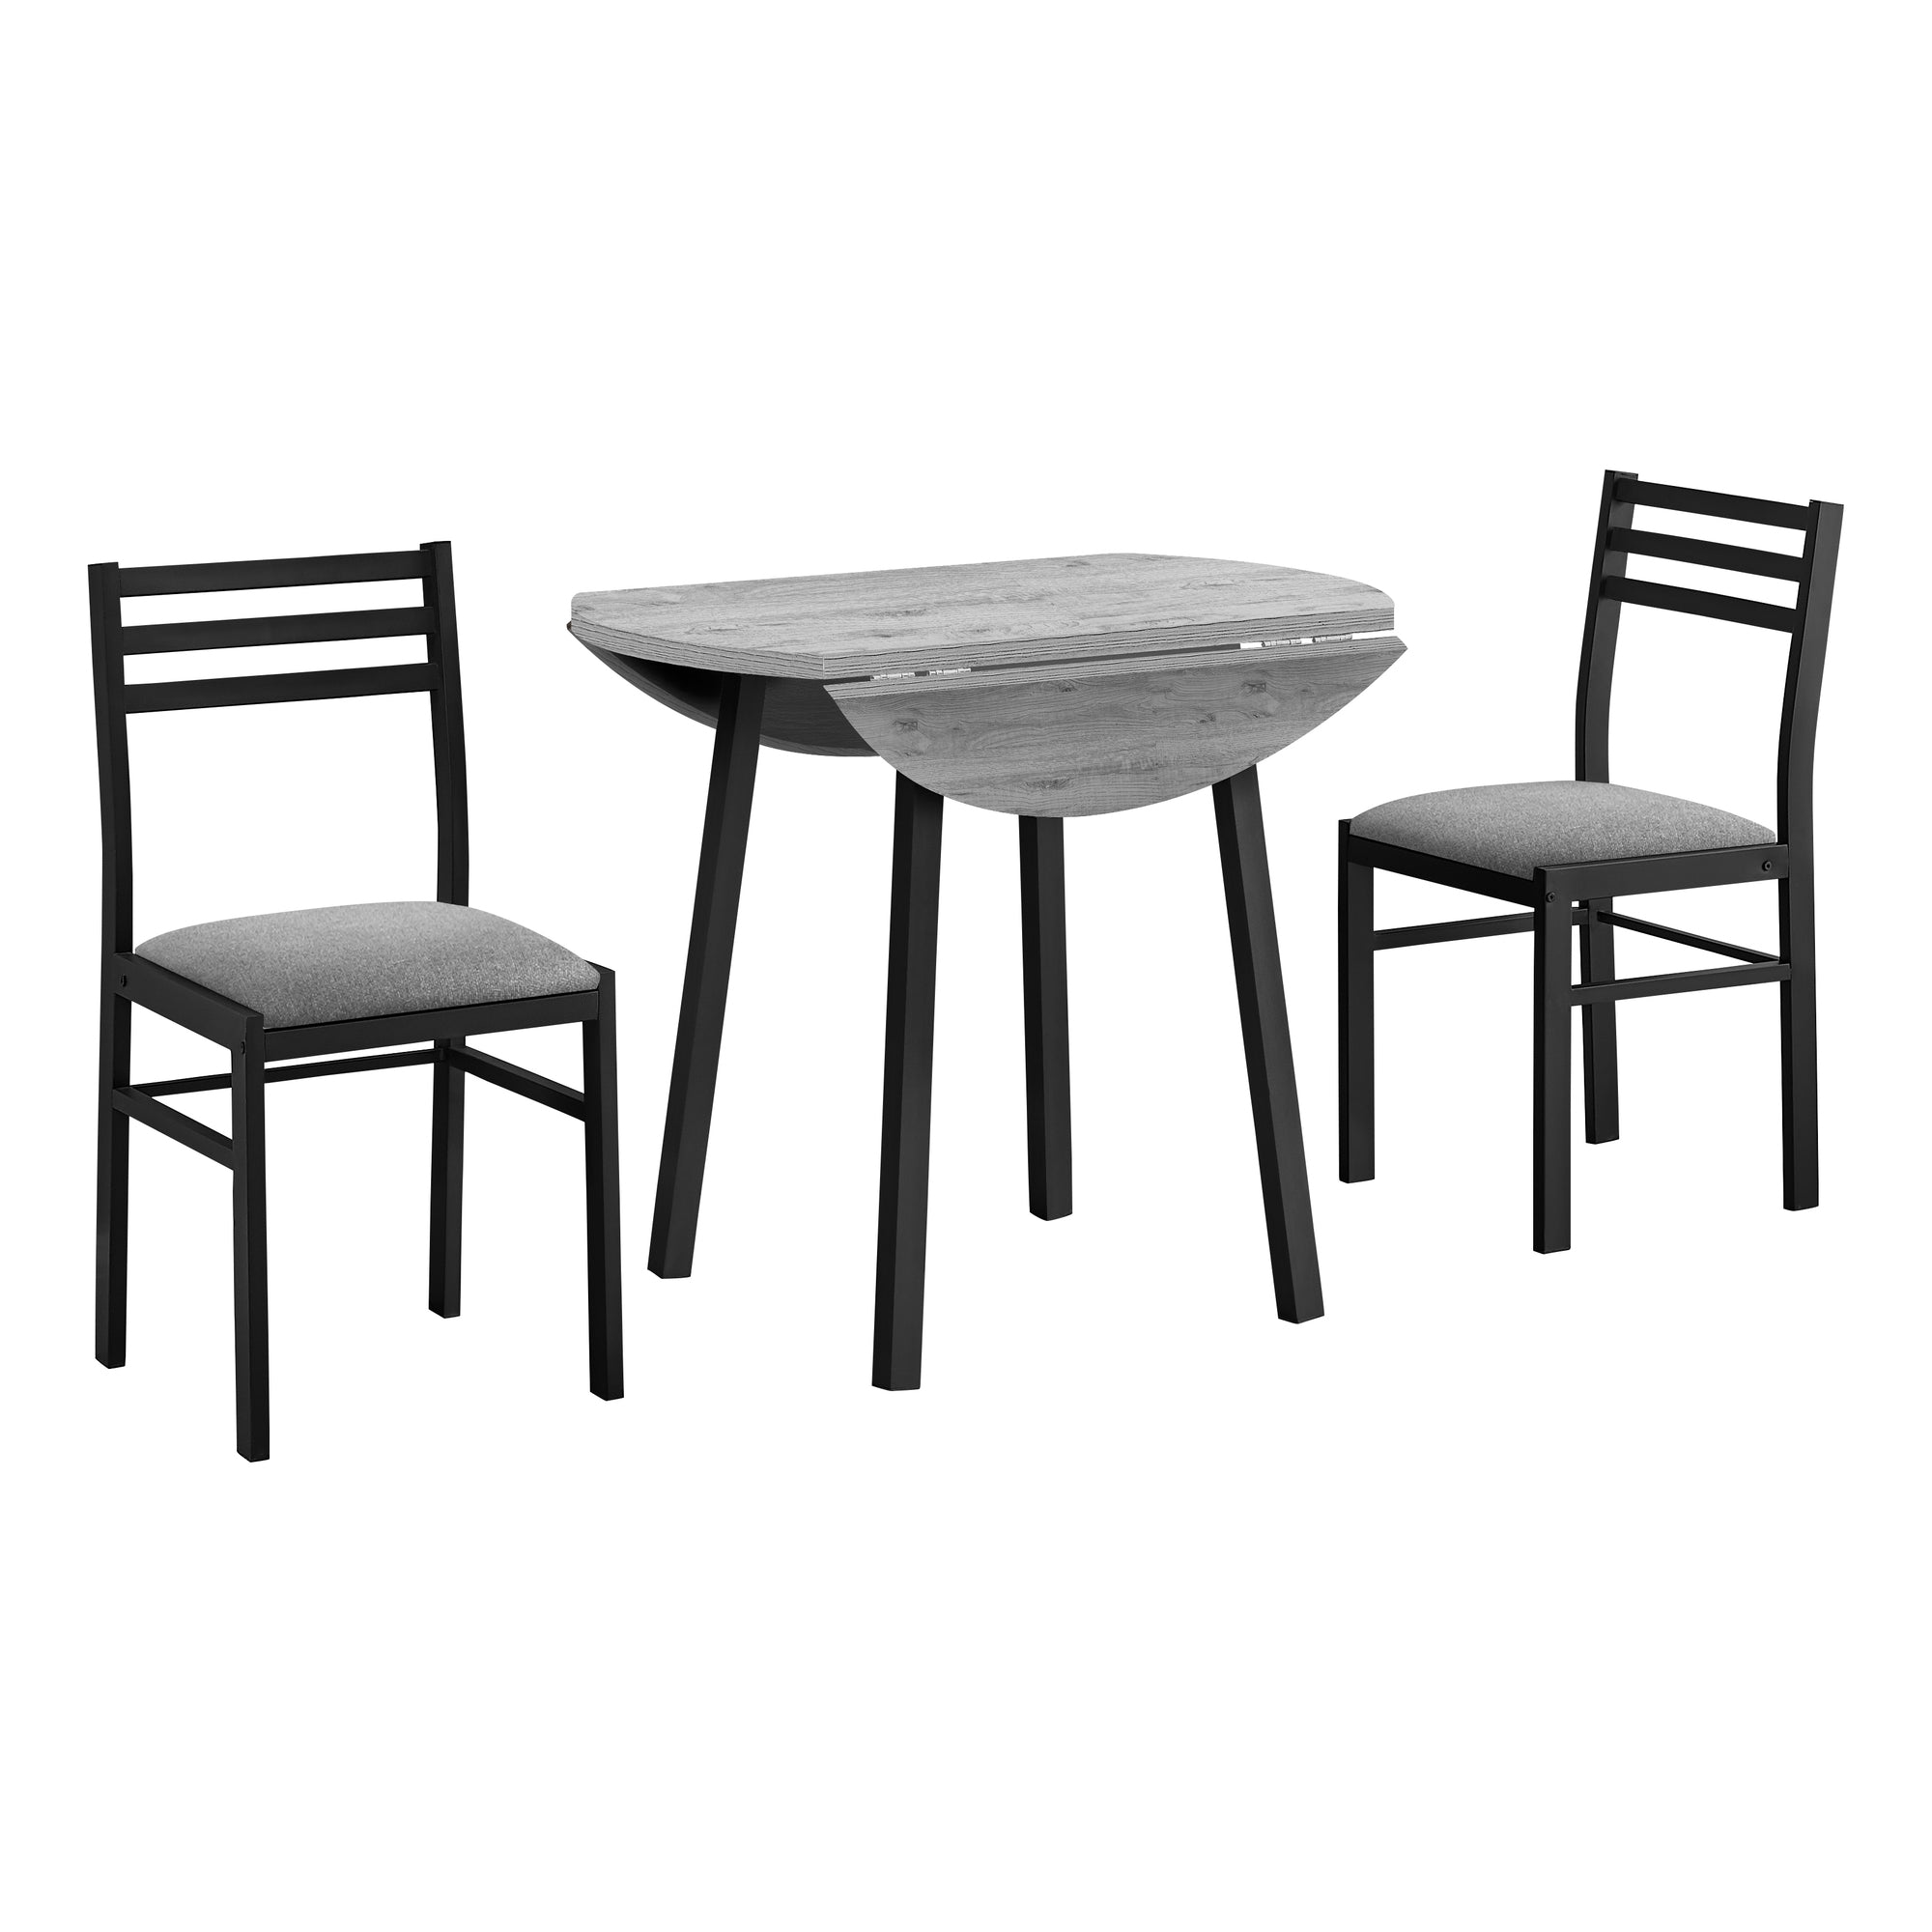 MN-111007    Dining Table Set, 3pcs Set, Small, 35" Drop Leaf, Kitchen, Black Metal, Grey Laminate, Contemporary, Modern